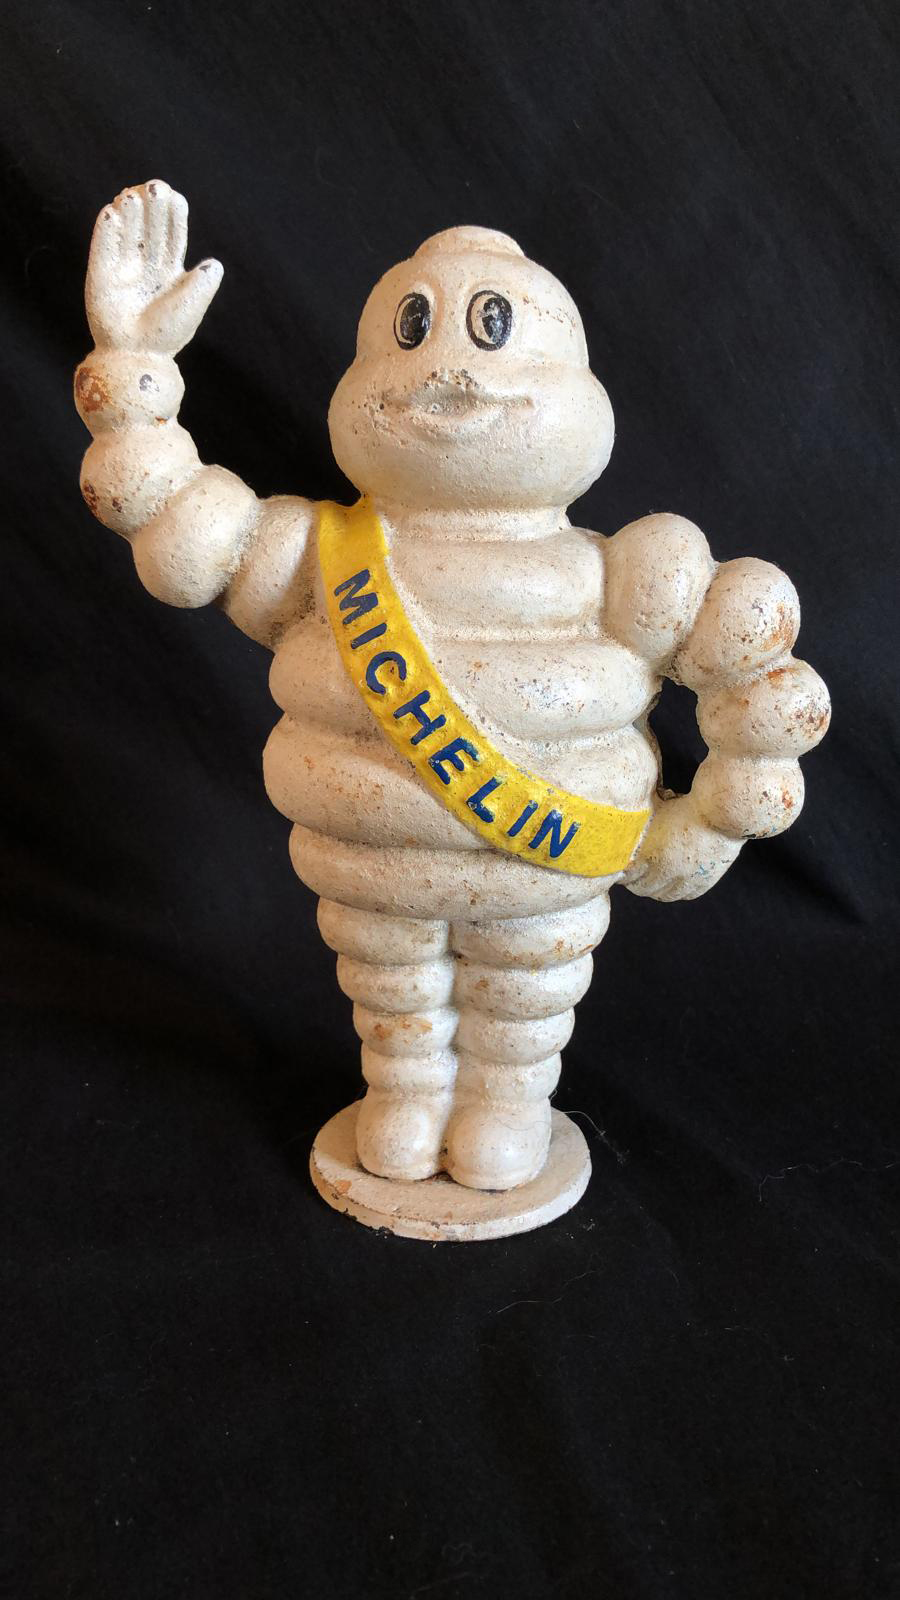 Cast Iron Michelin Man at Dolan's Art Auction House